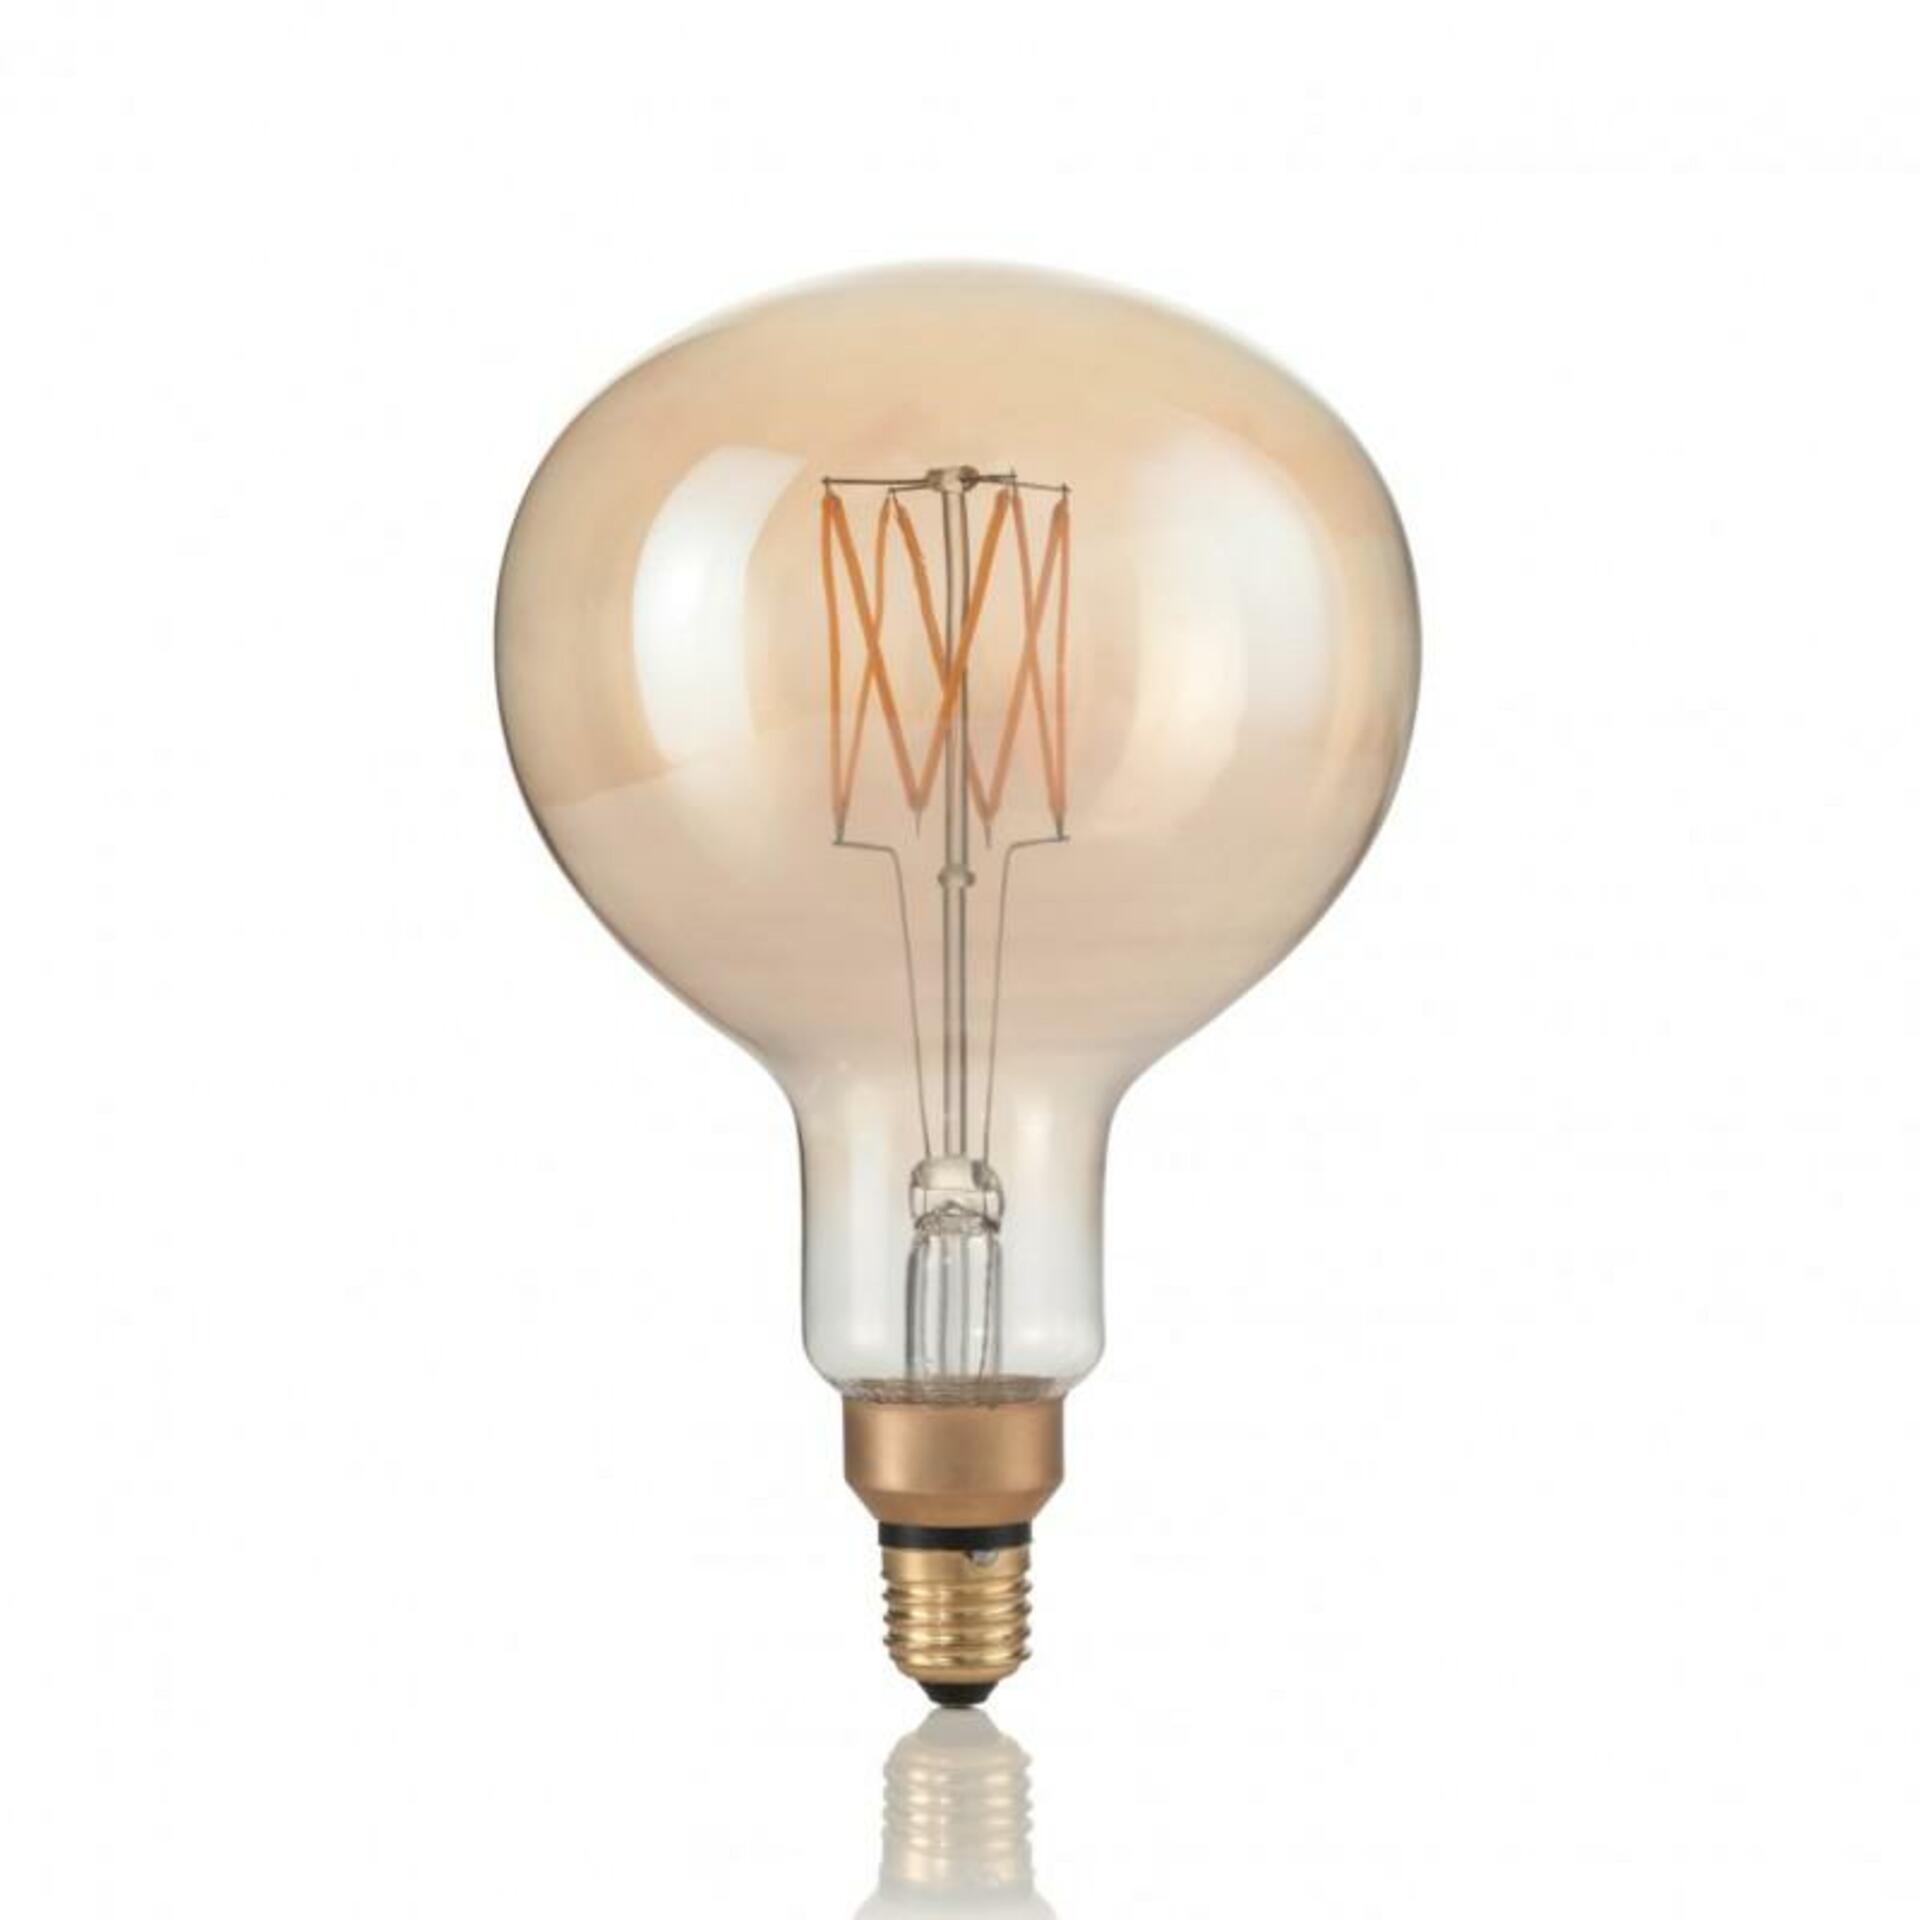 LED Žárovka Ideal Lux Vintage XL E27 4W 129877 2200K globo small